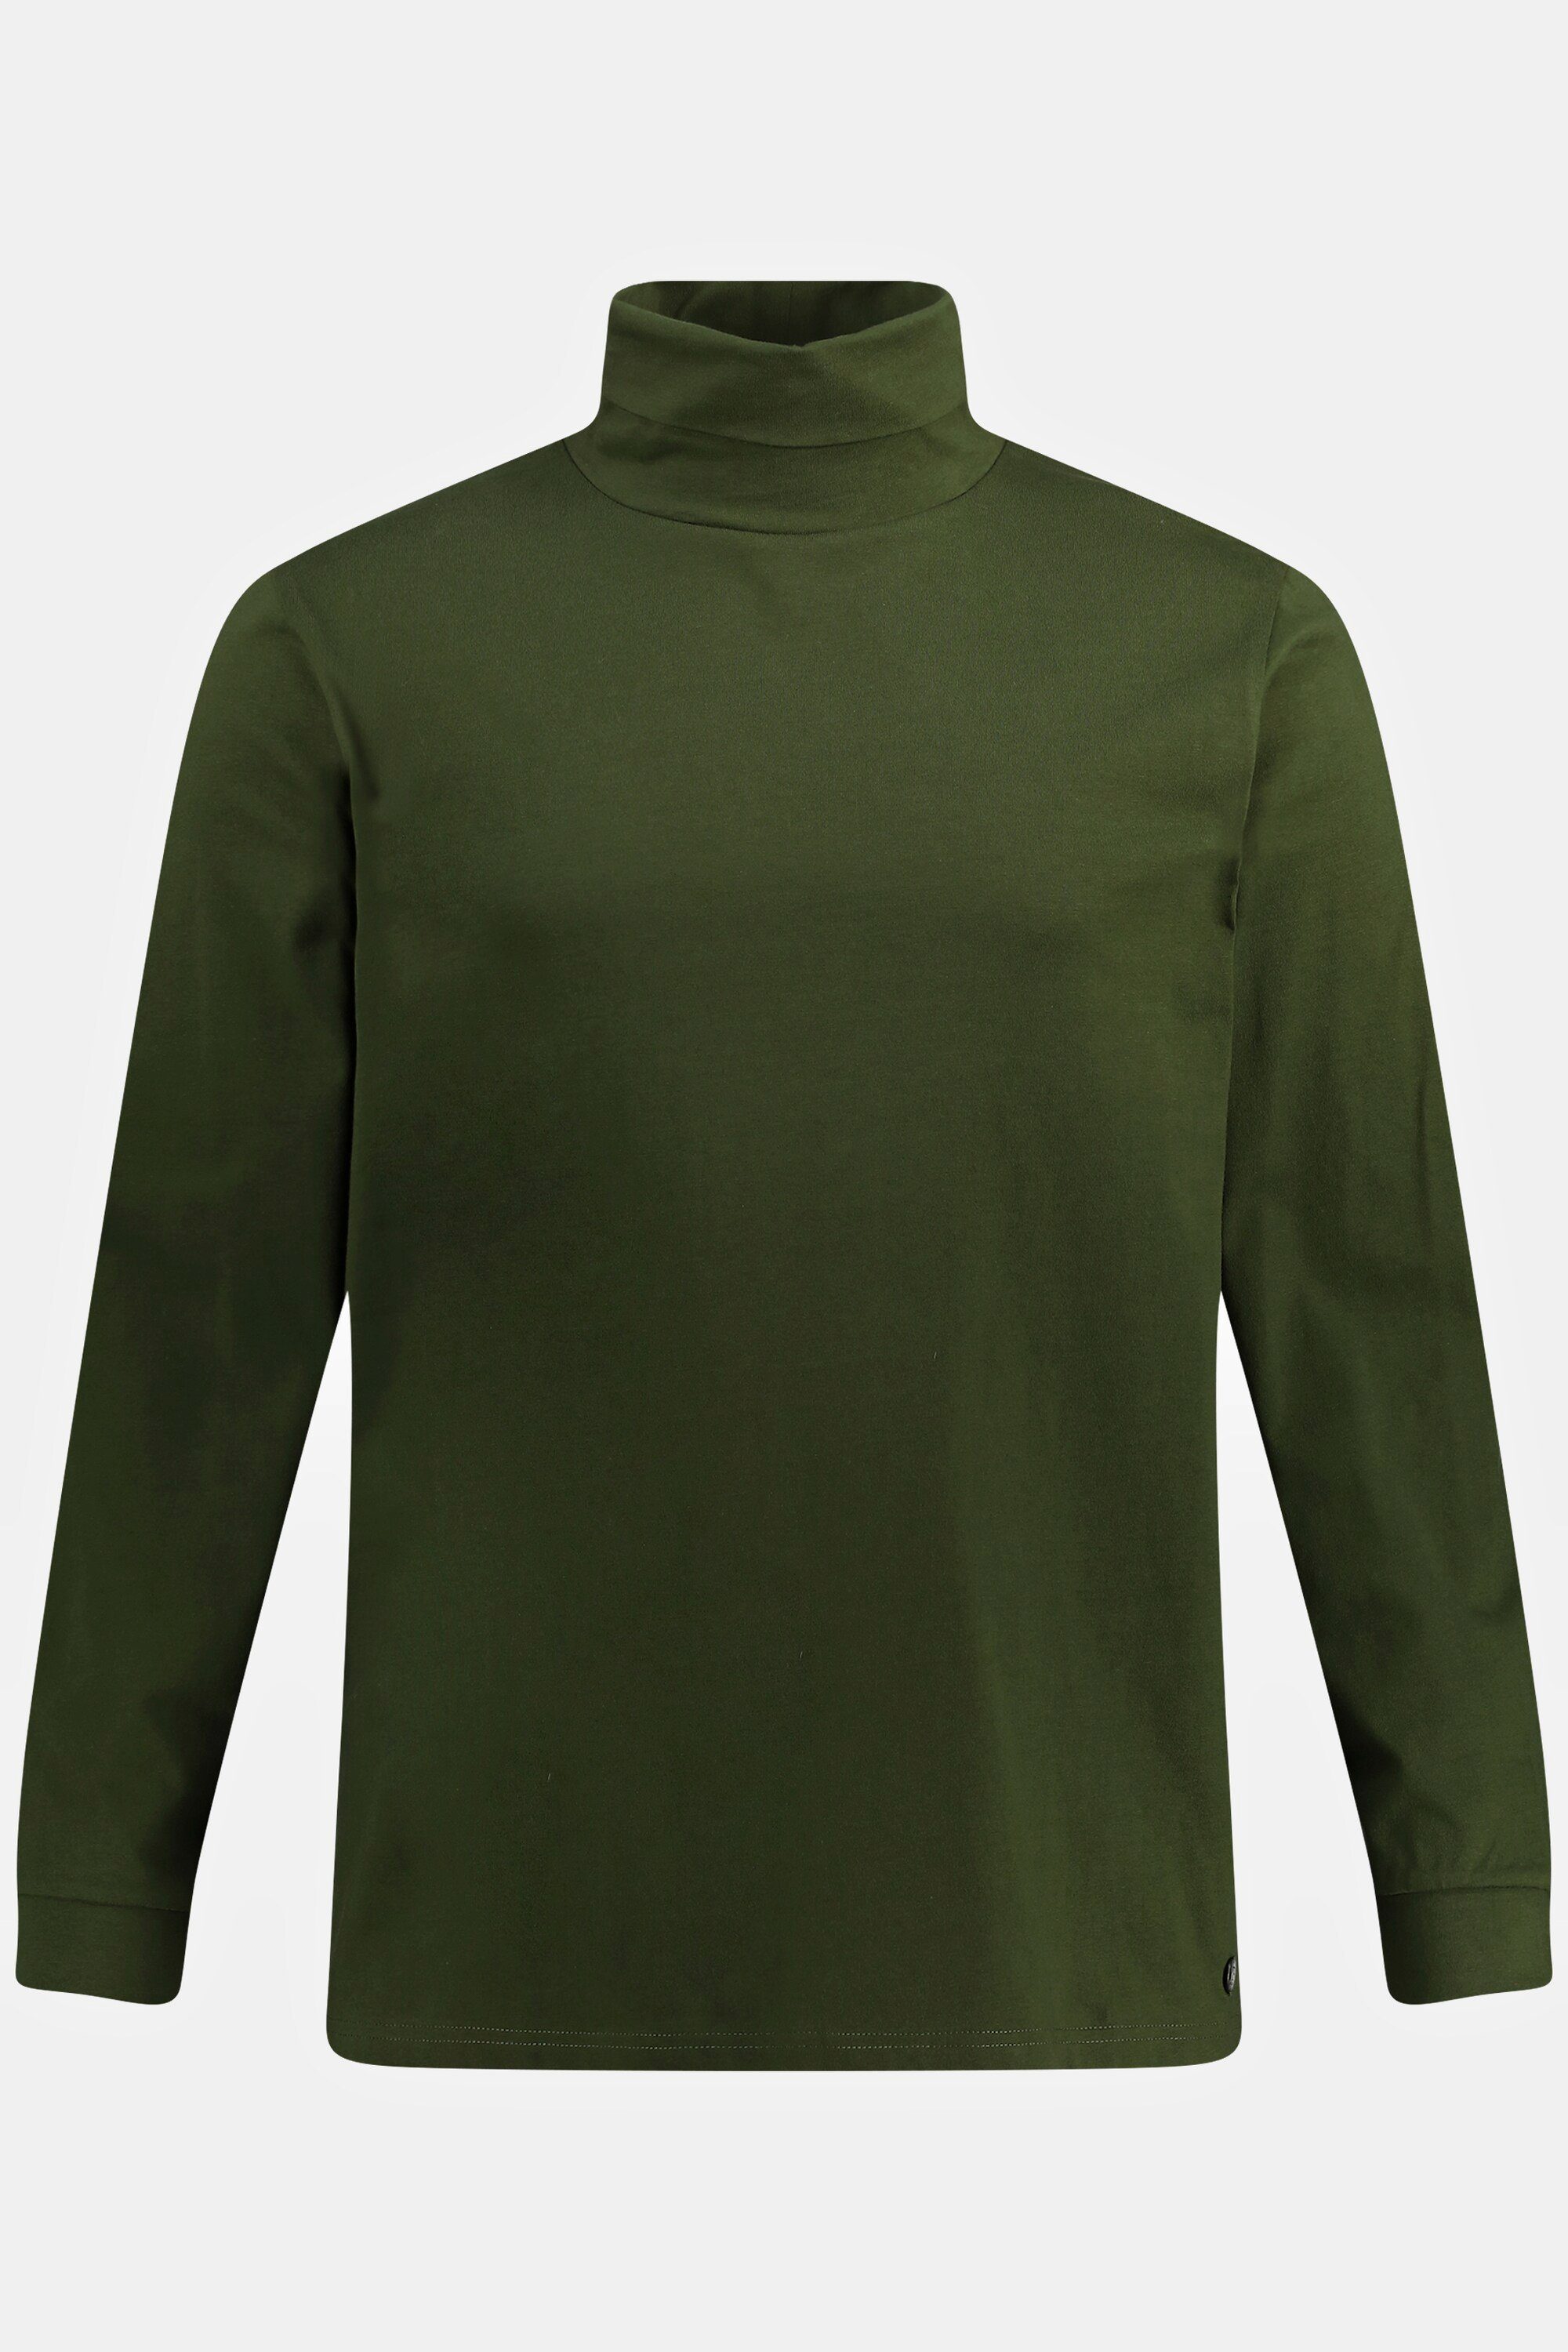 JP1880 Jersey Rollkragen-Shirt Ärmel Basic oliv lange T-Shirt